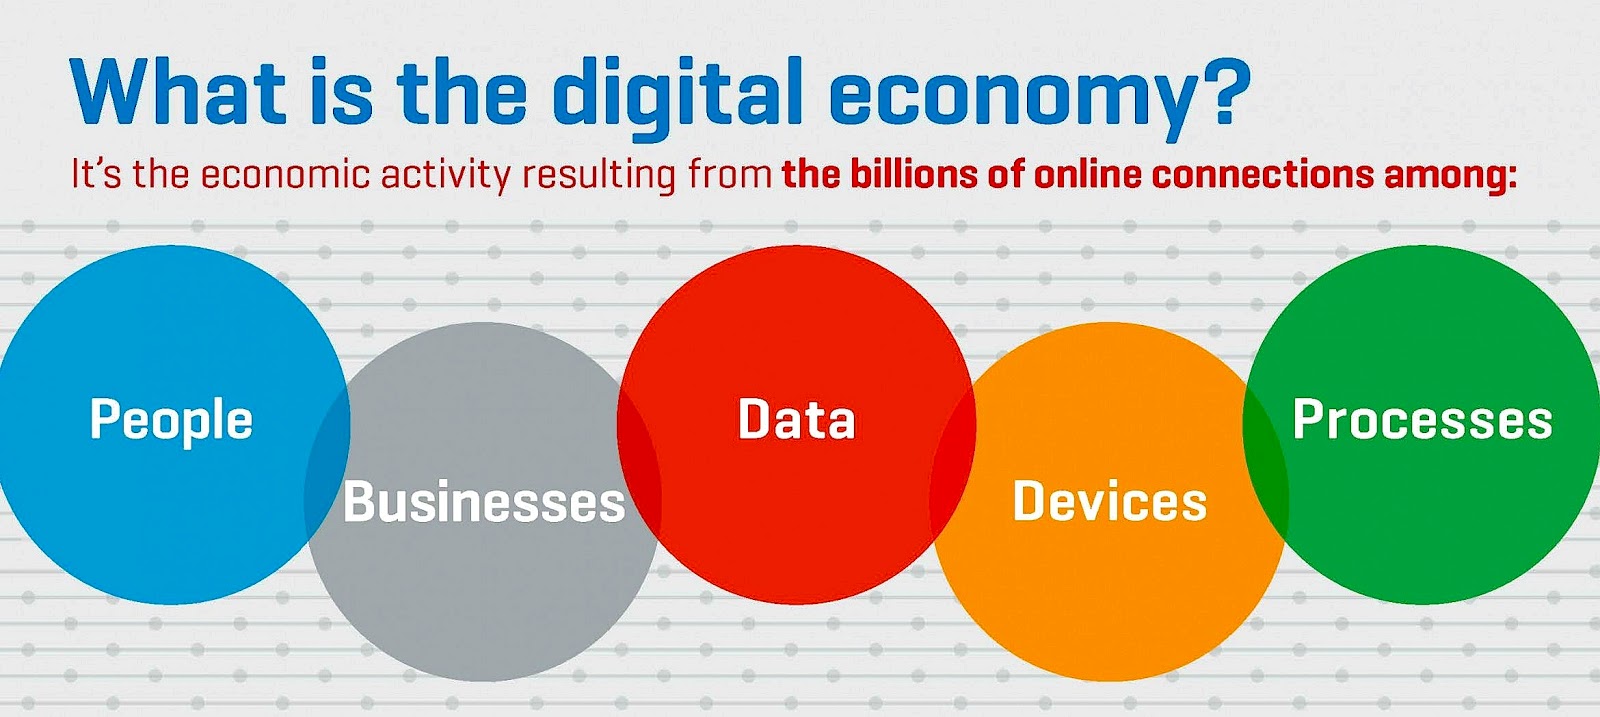 Digital economic